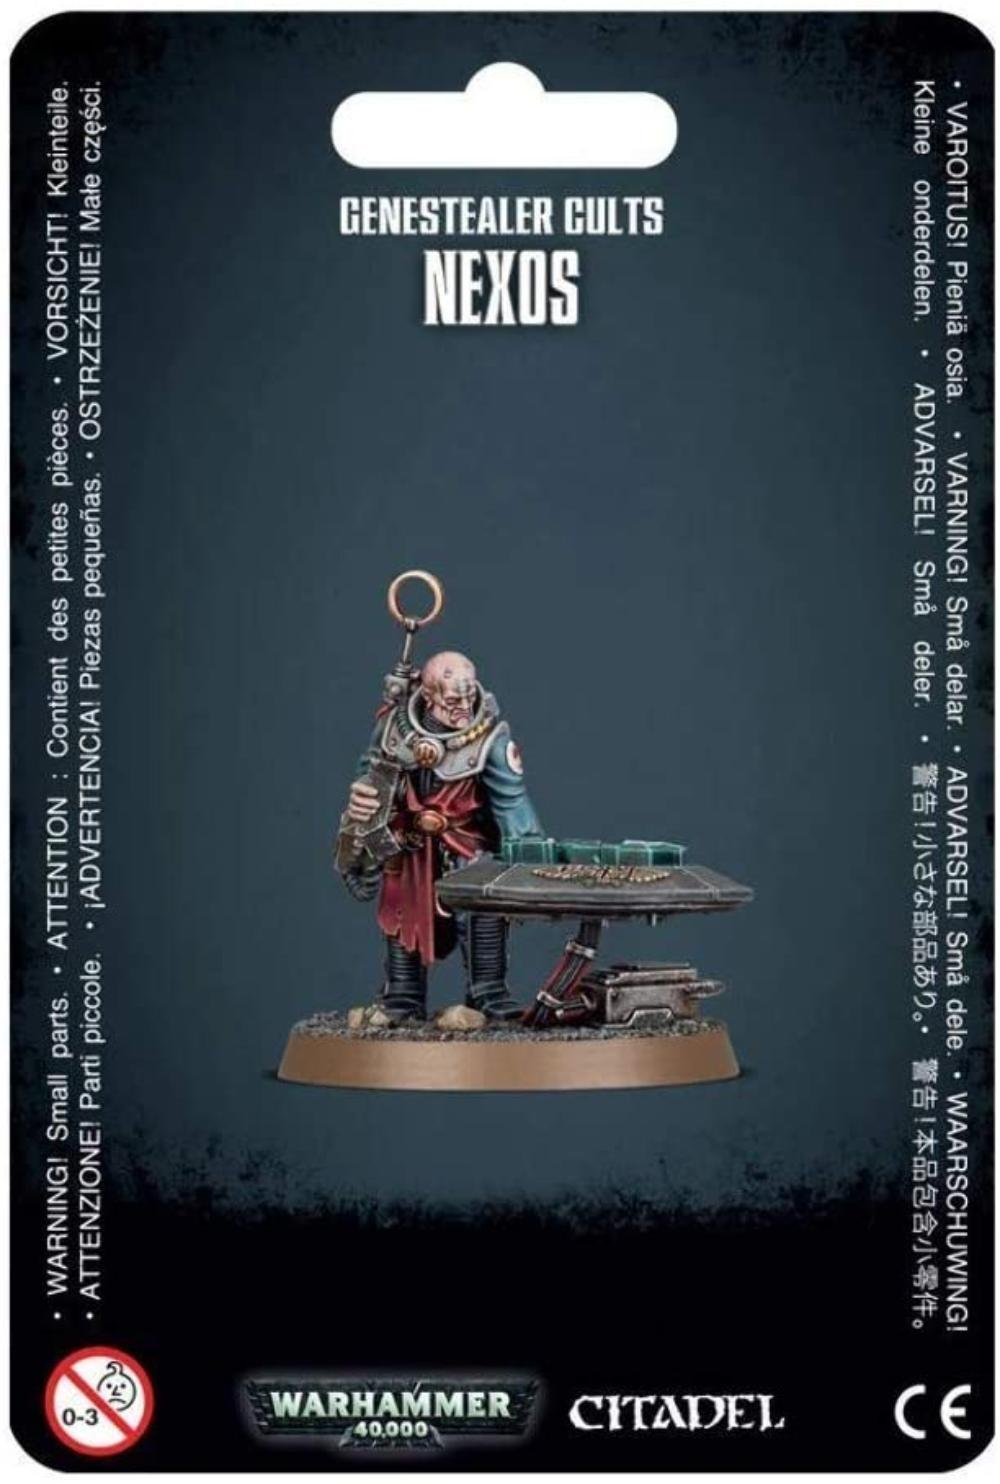 Warhammer: 40,000 - Genestealer Cults: Nexos